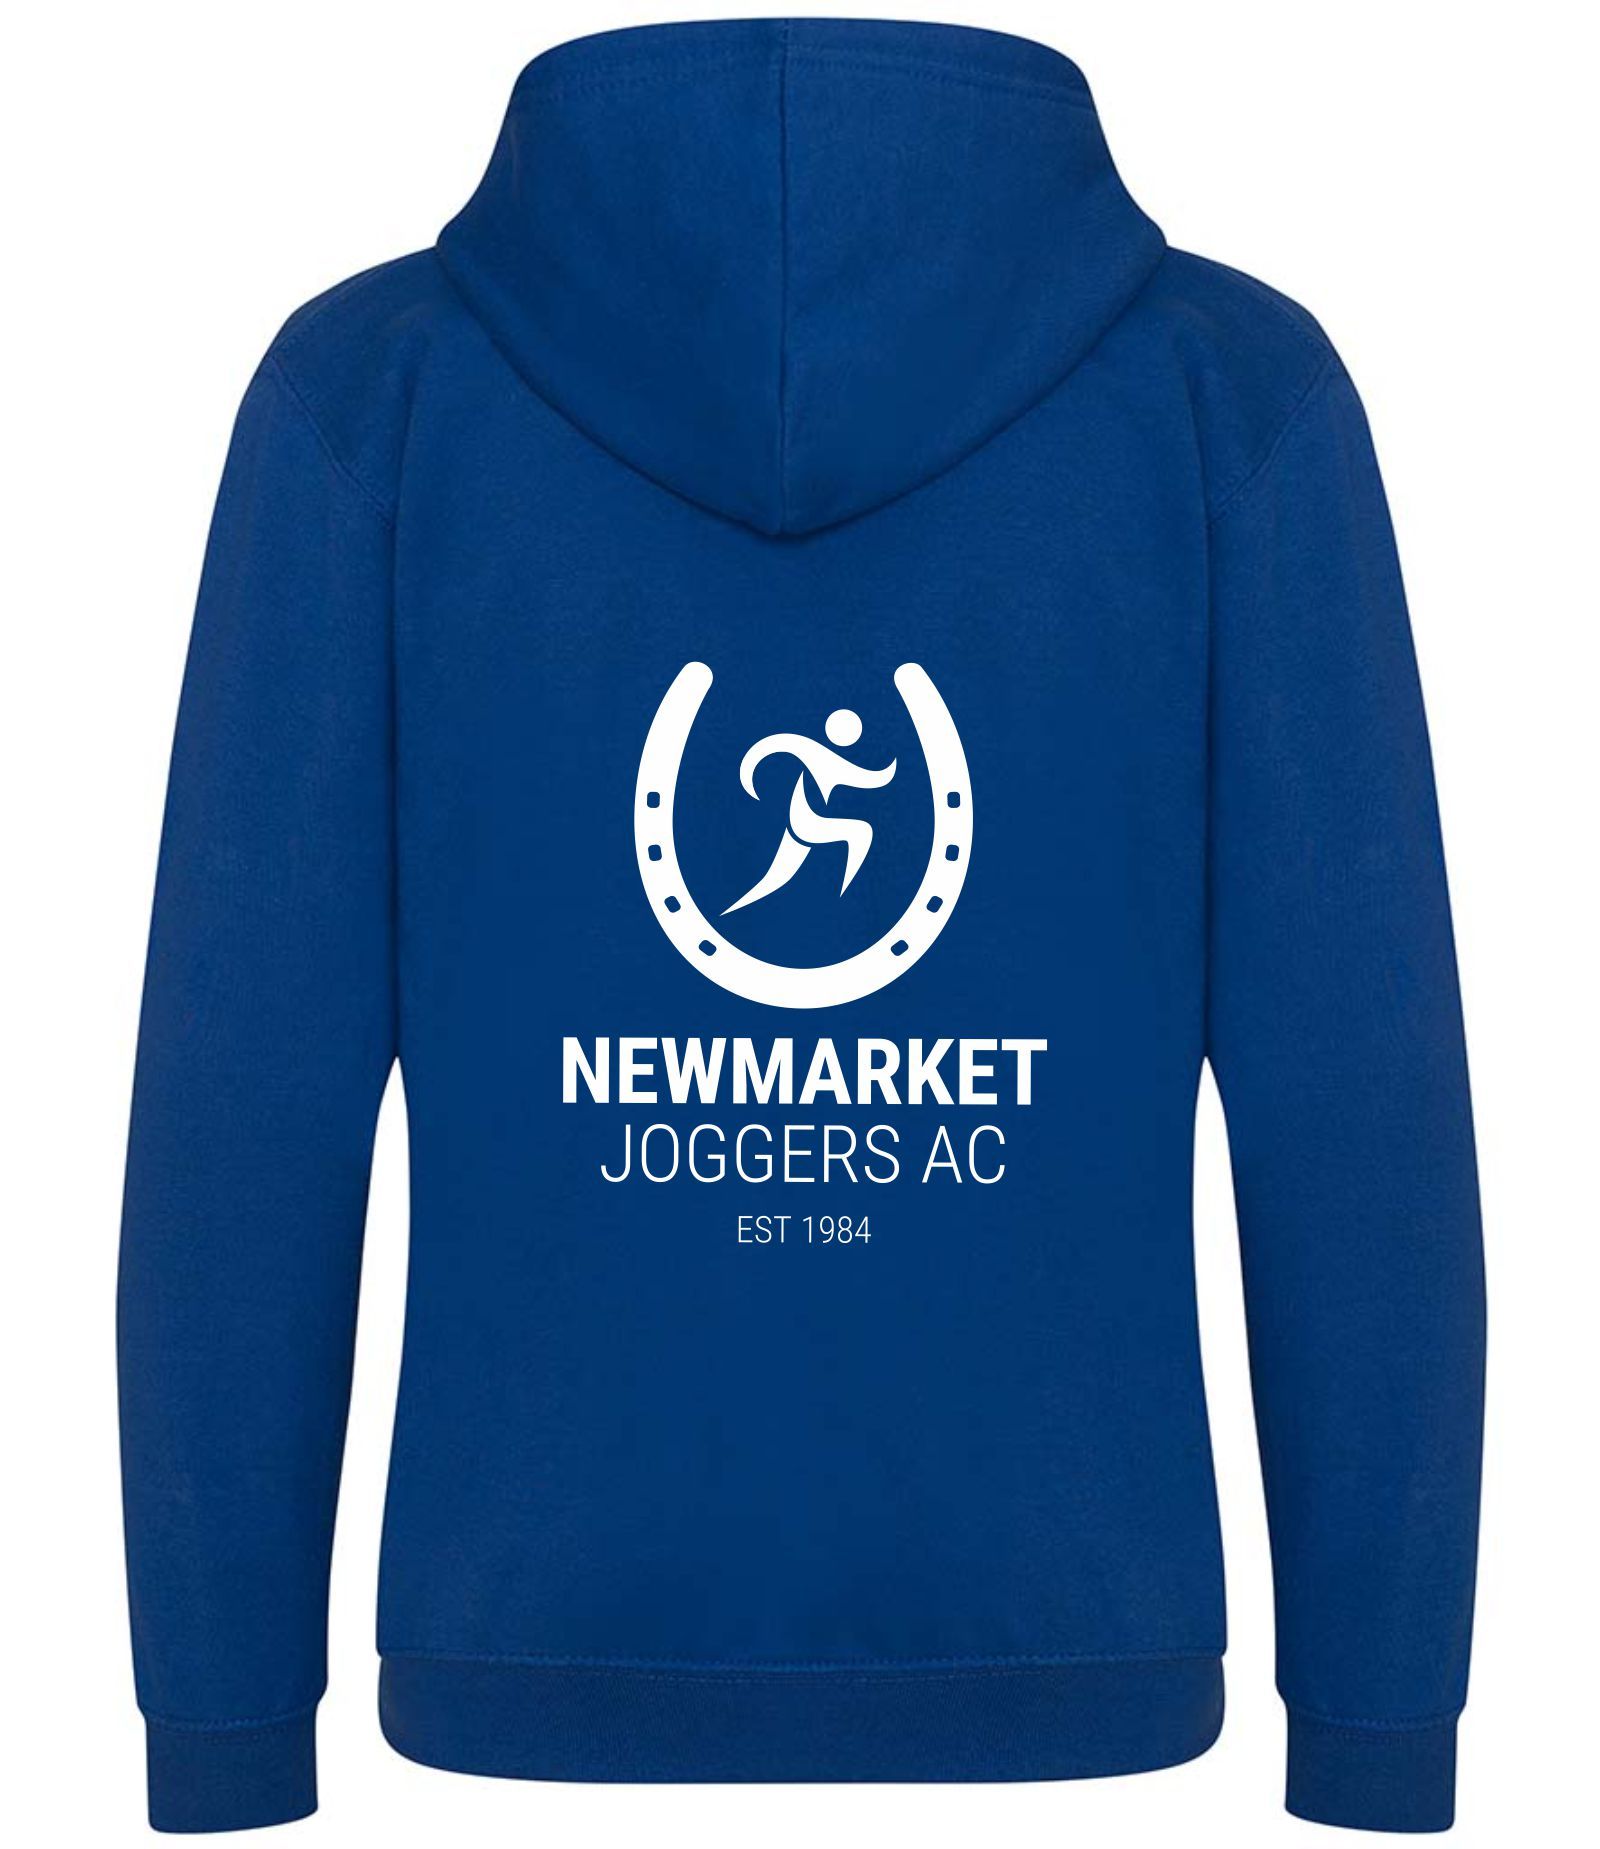 Newmarket Joggers – Hoodie with zip (Kids)